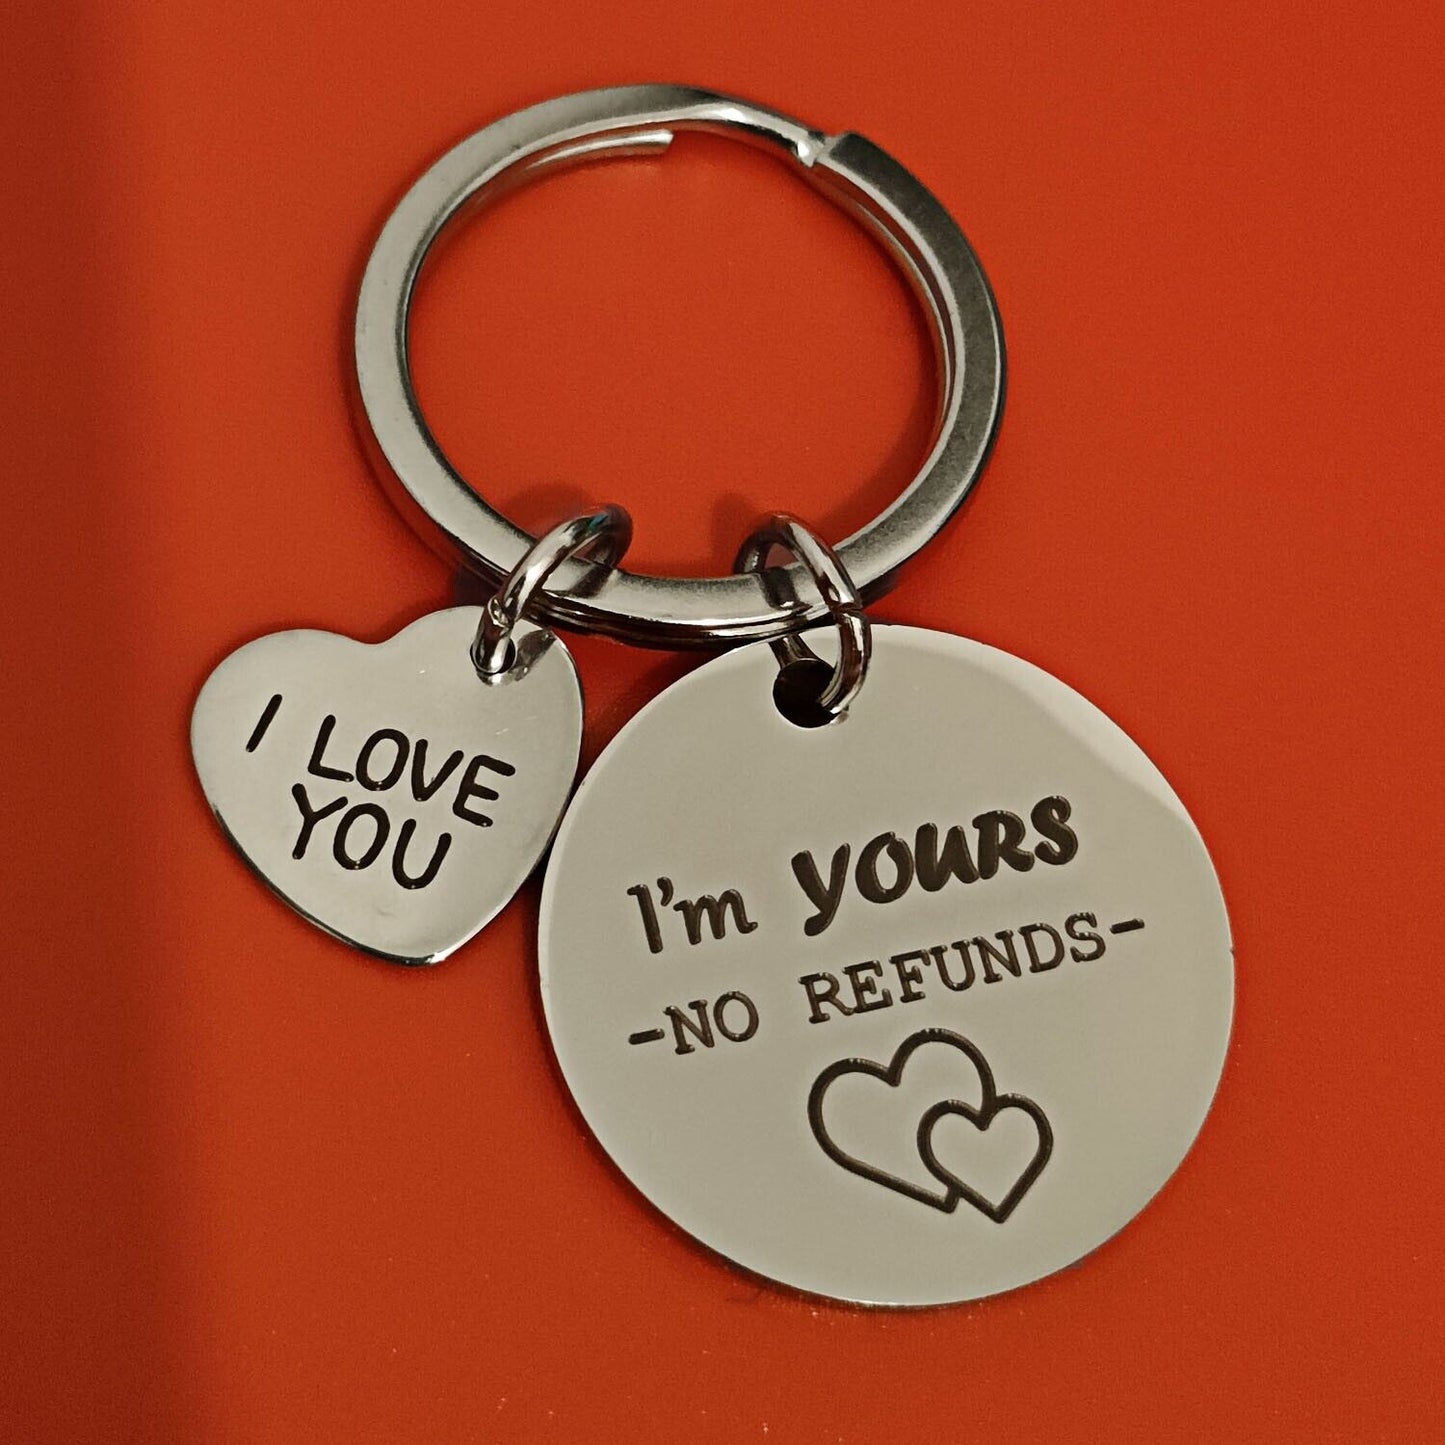 Couple's Humor Keychain (I'm Yours)